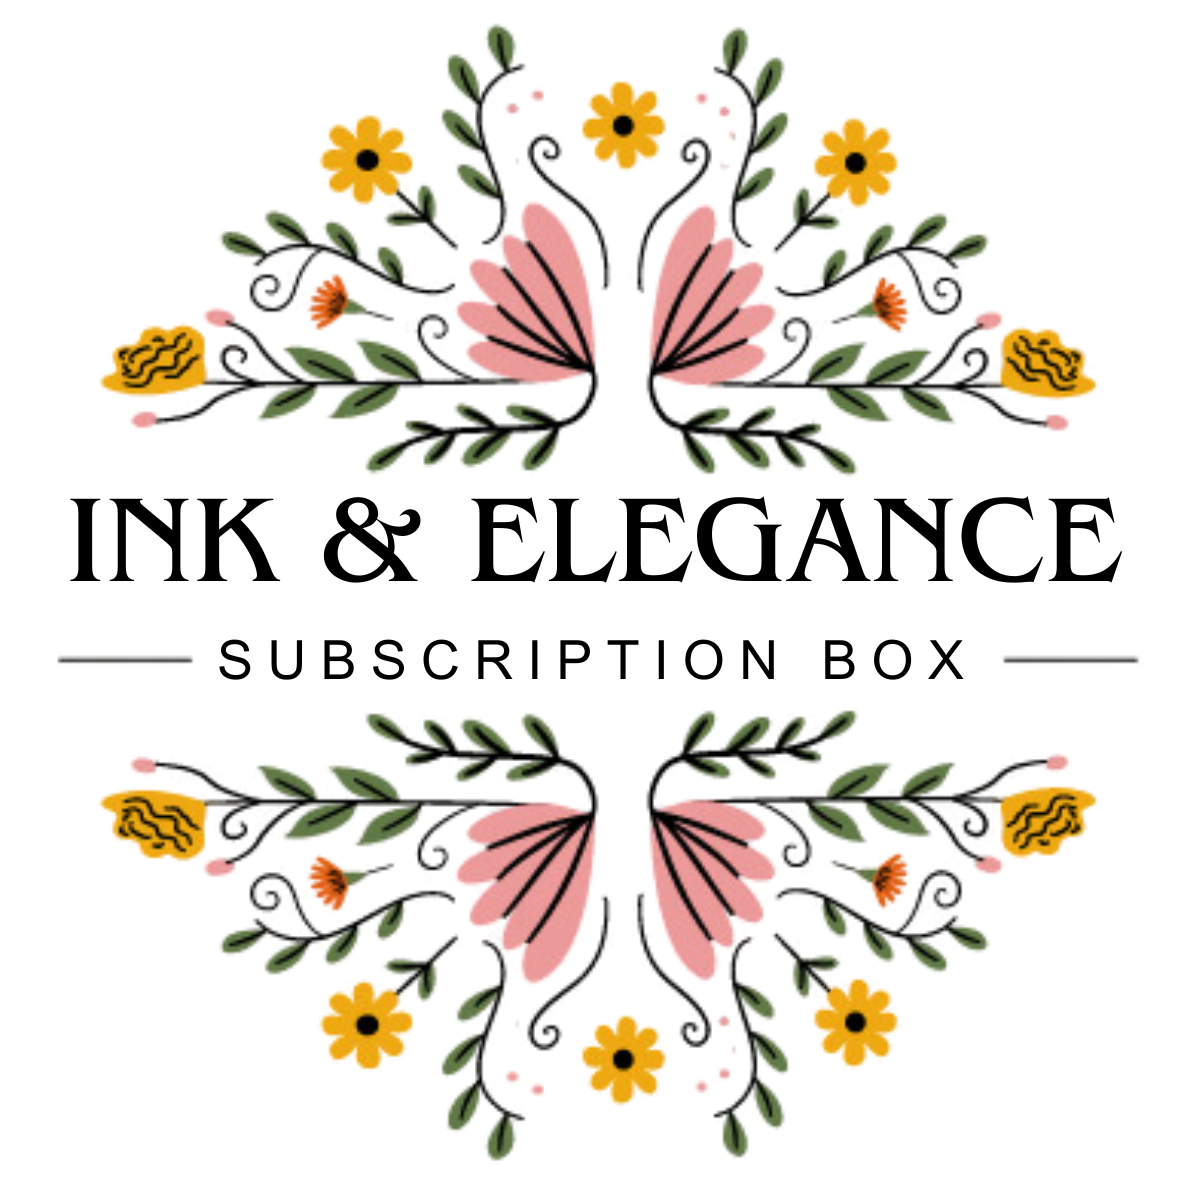 Ink-and-elegance-65eb795f0f16c